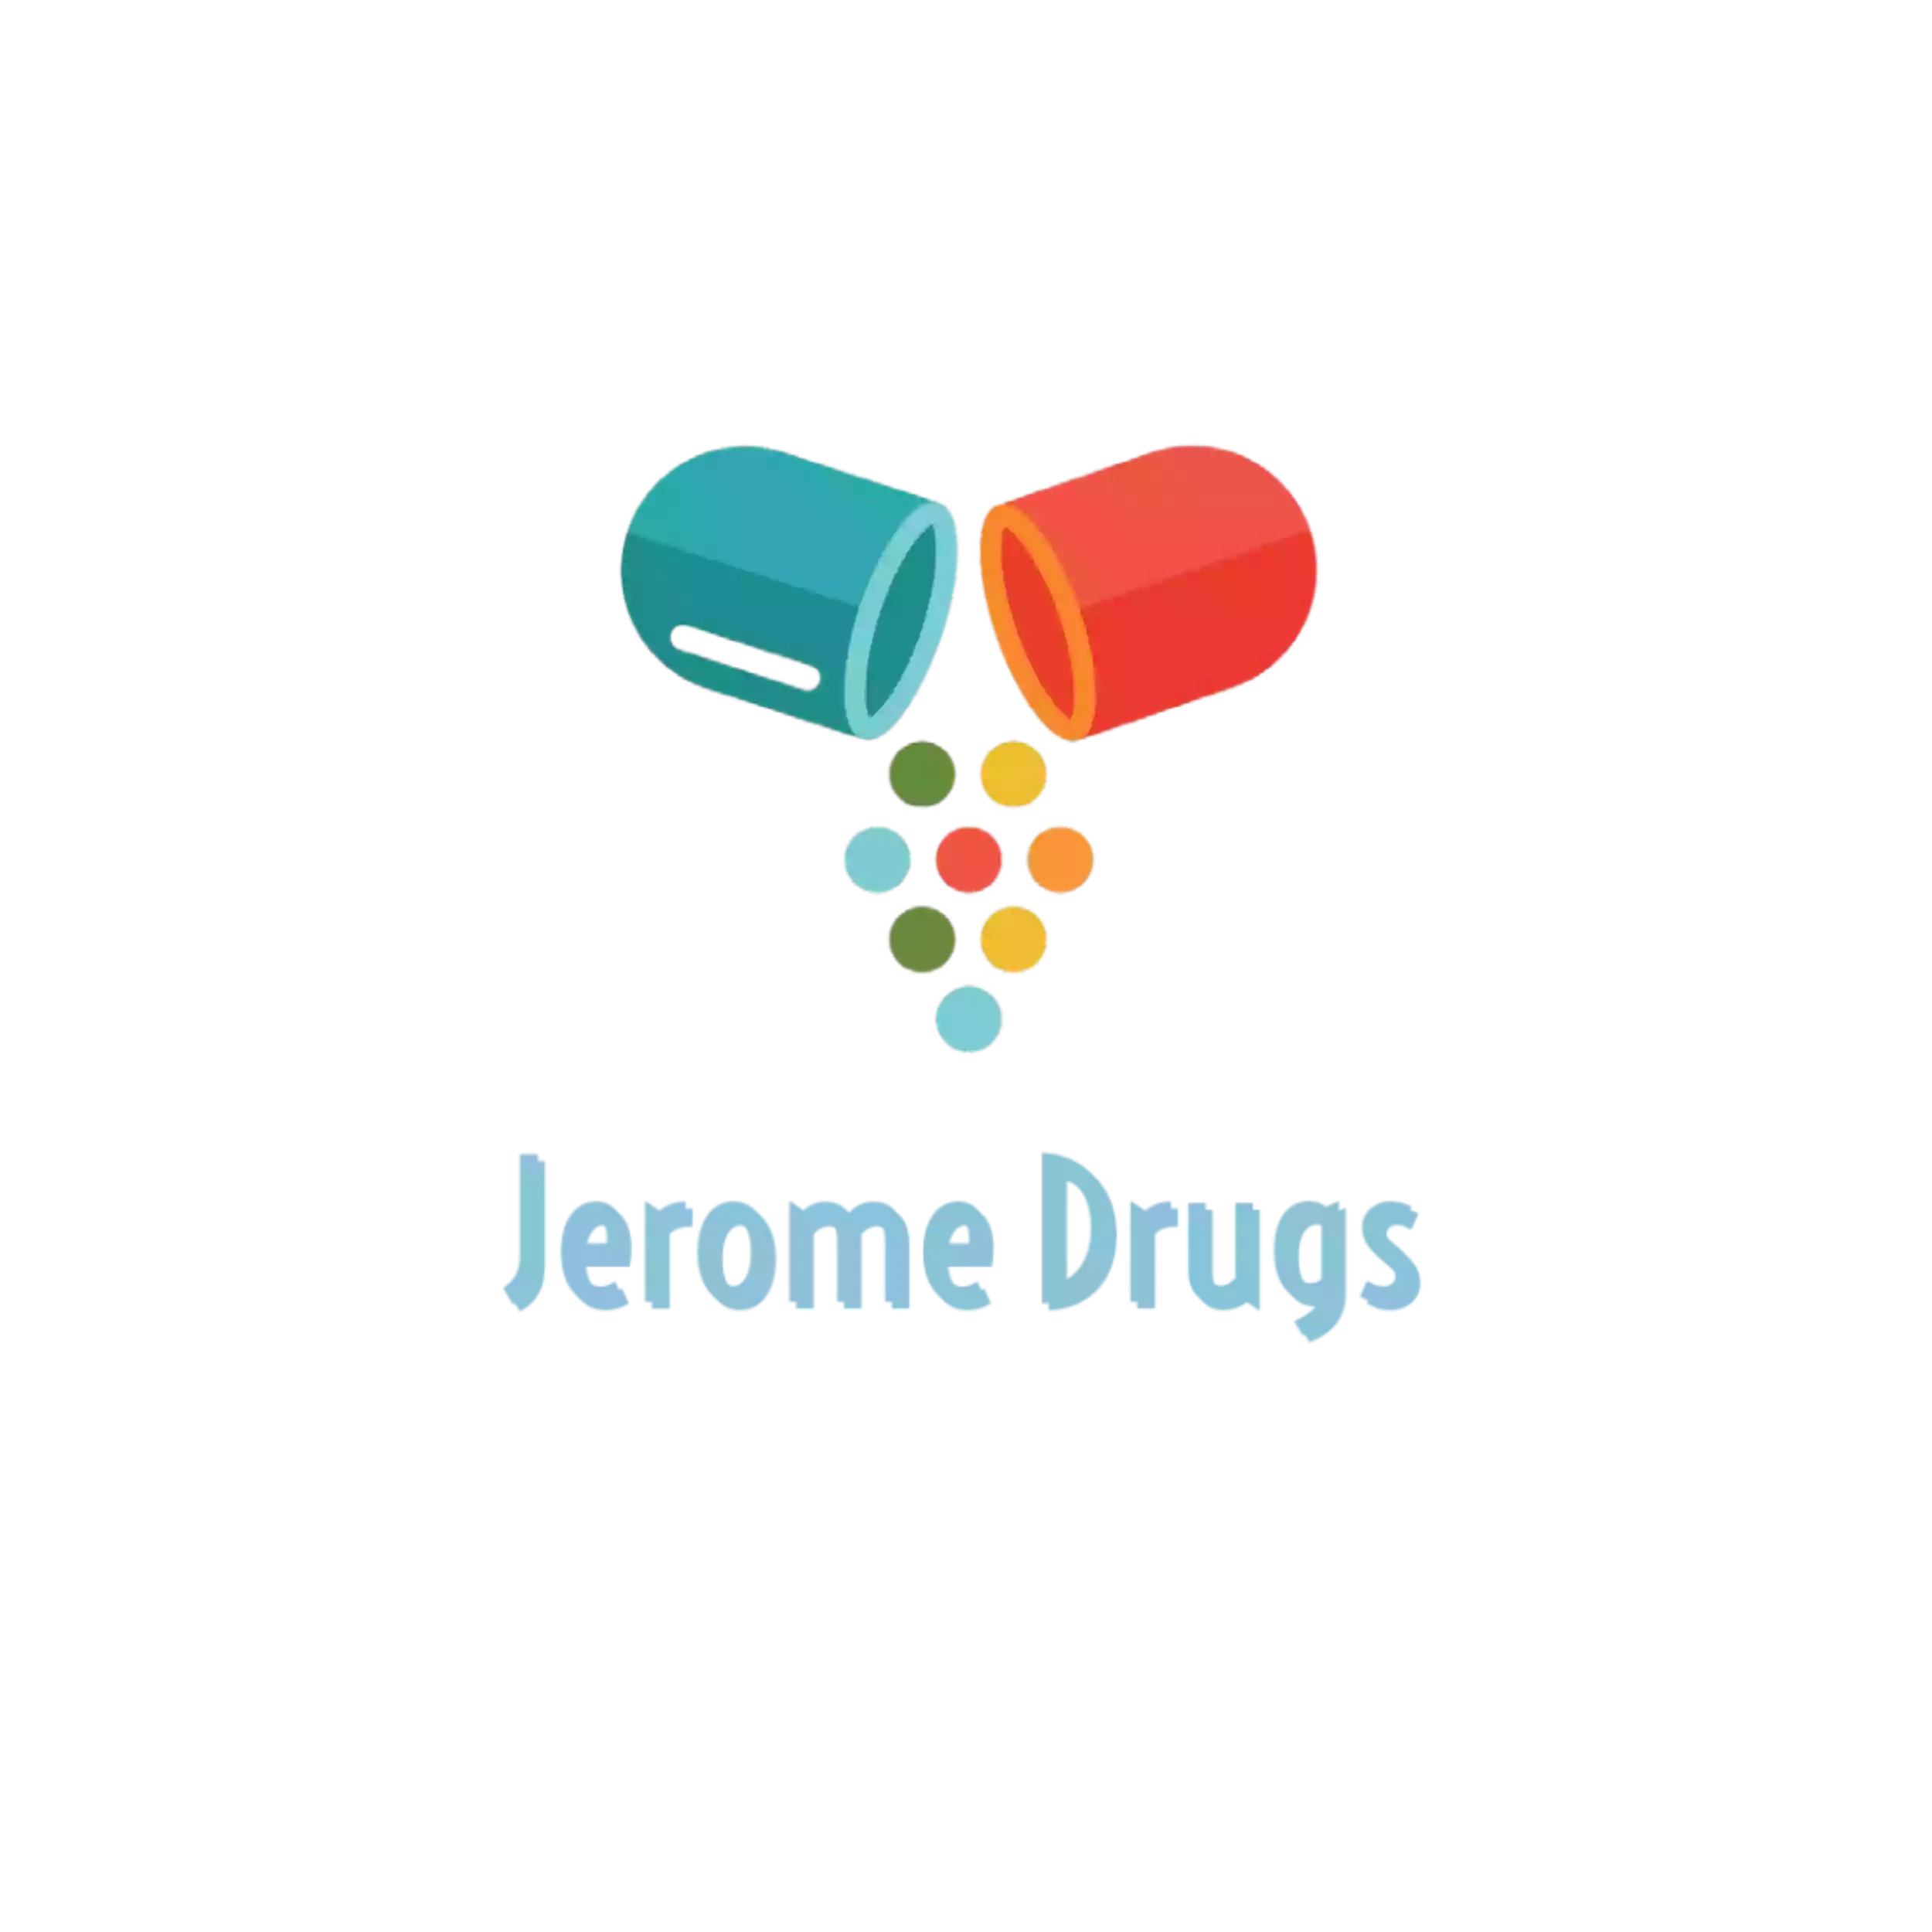 Jerome Drugs